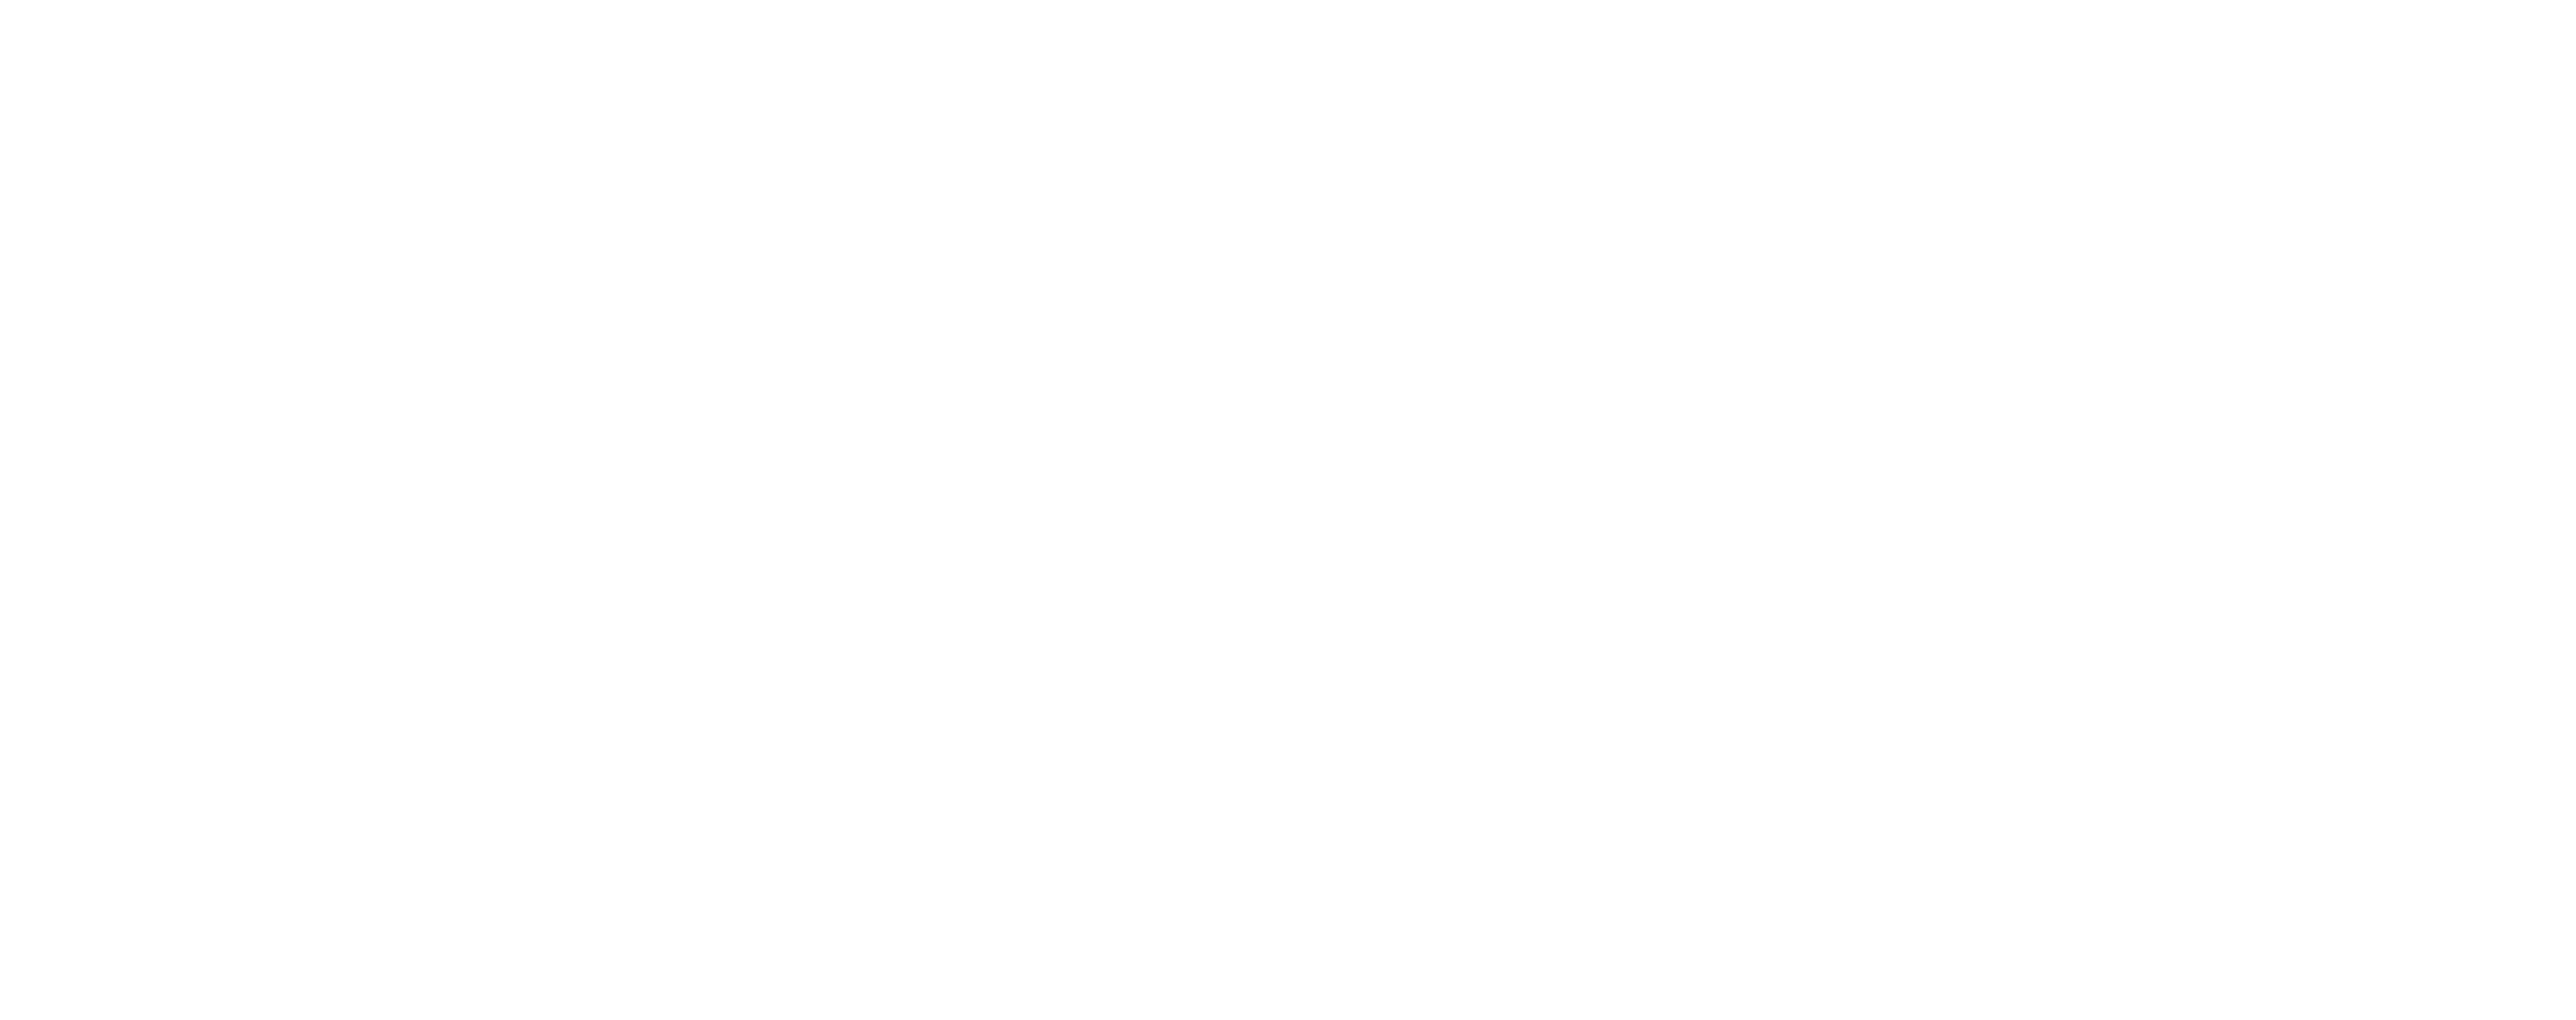 The Addams Family logo